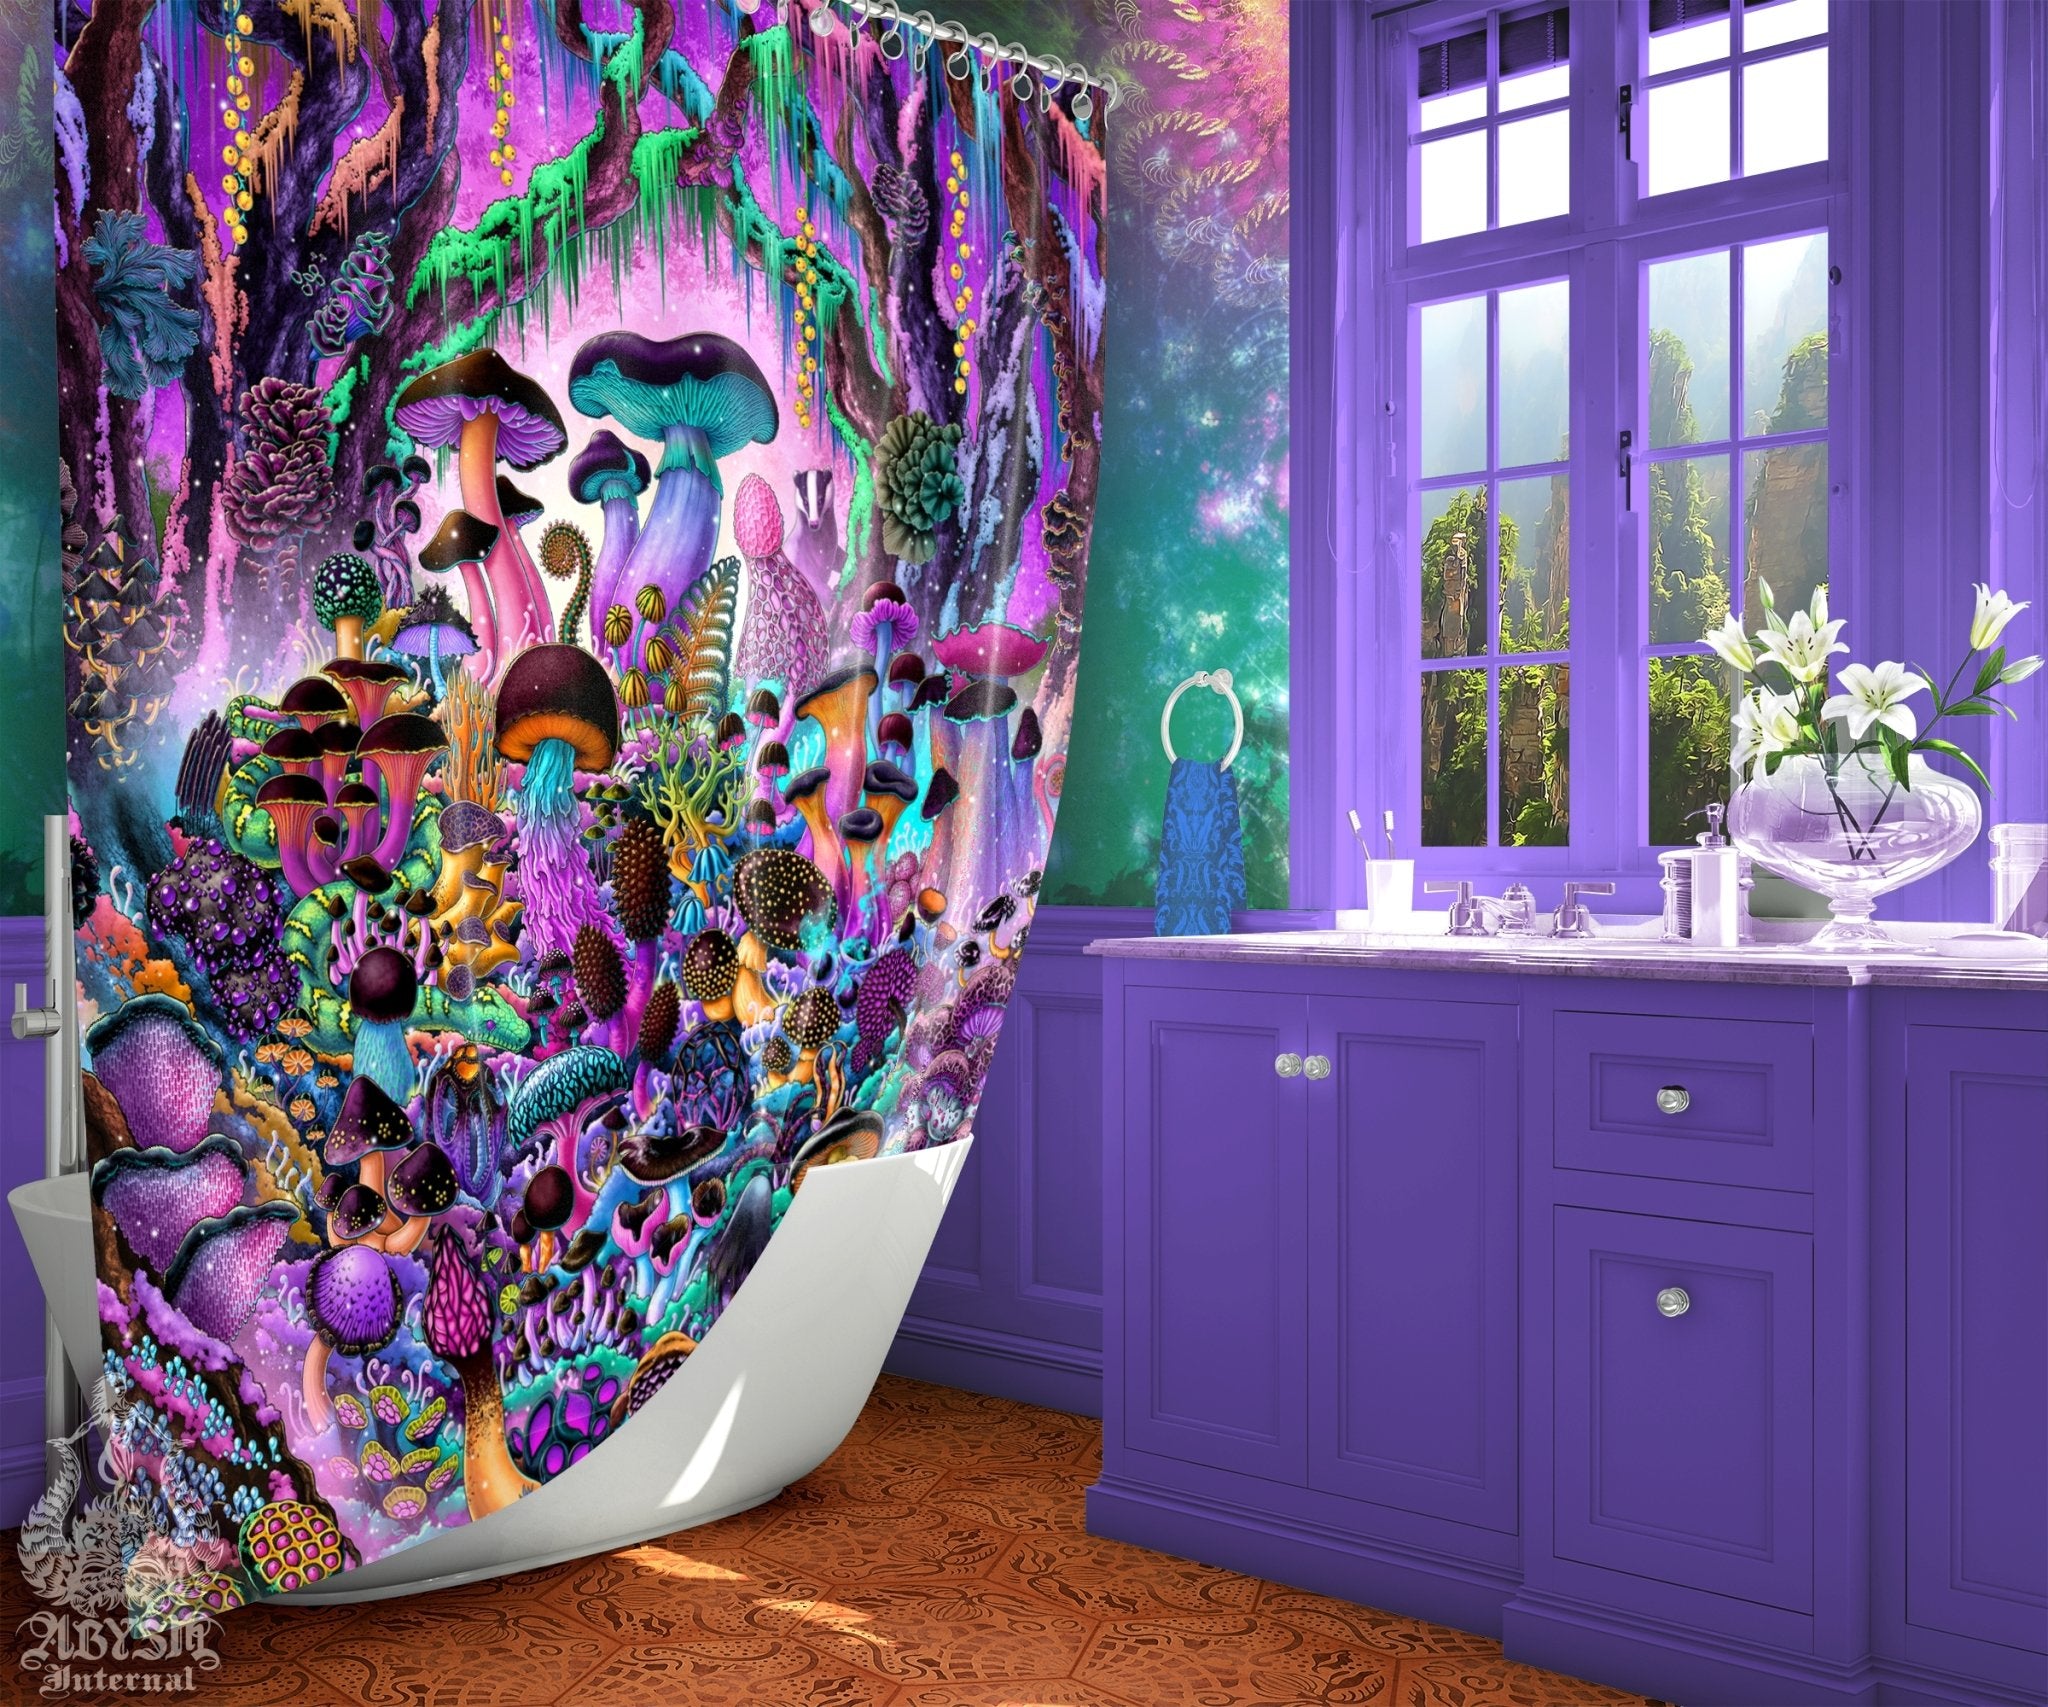 Pastel Mushrooms Shower Curtain, 71x74 inches, Girl Bathroom Decor,  Aesthetic Home Art, Mycologist Gift - Magic Shrooms